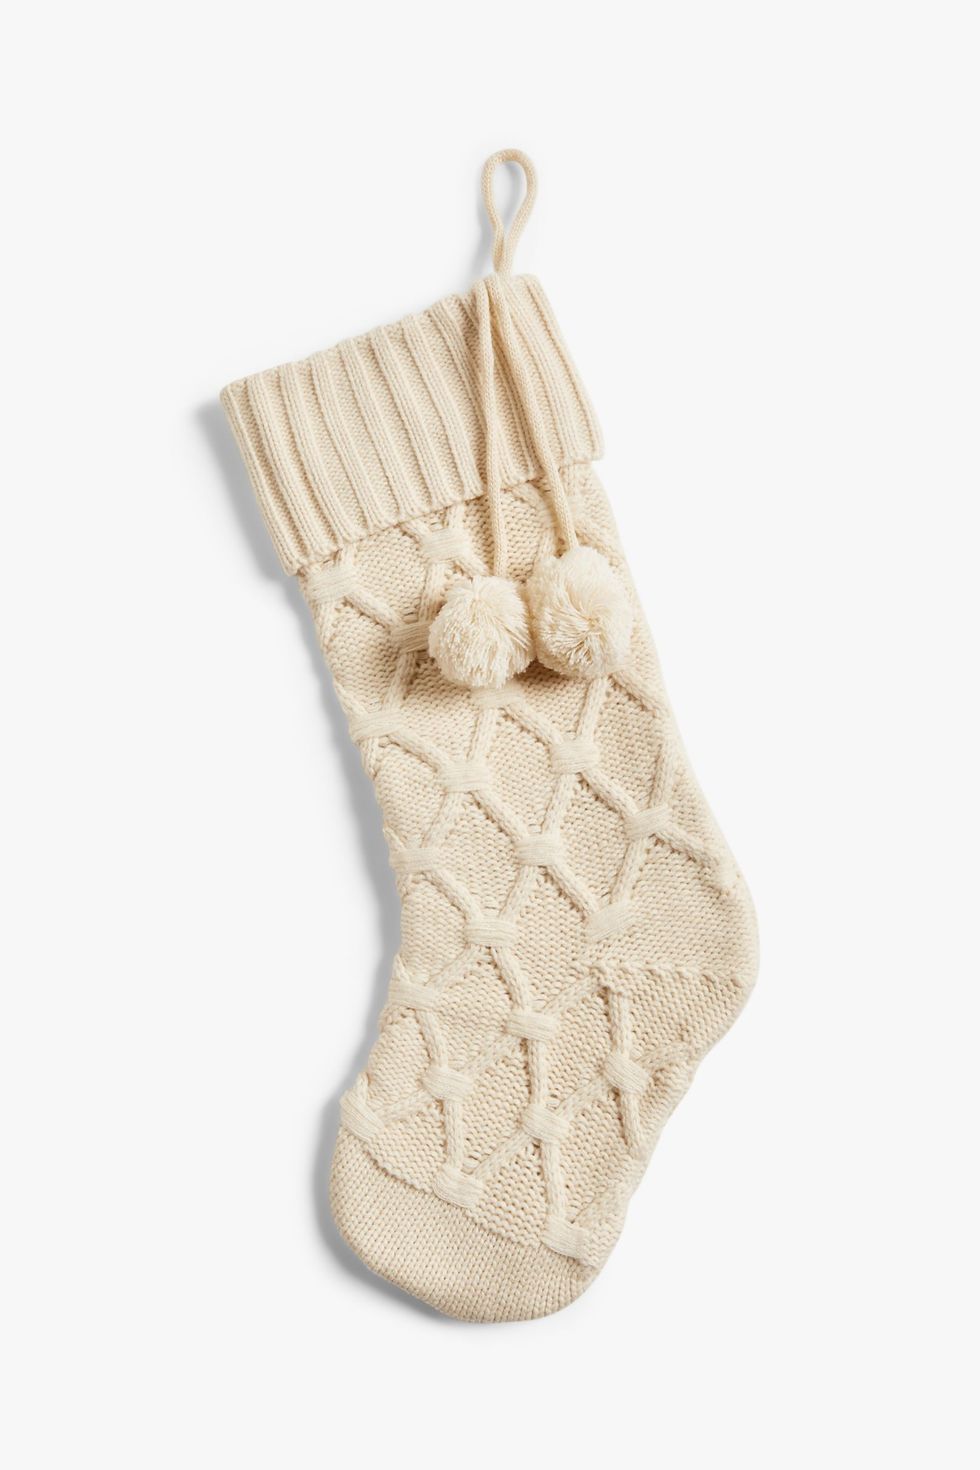 Chunky Knit Wool Christmas Stockings - Cream Pom